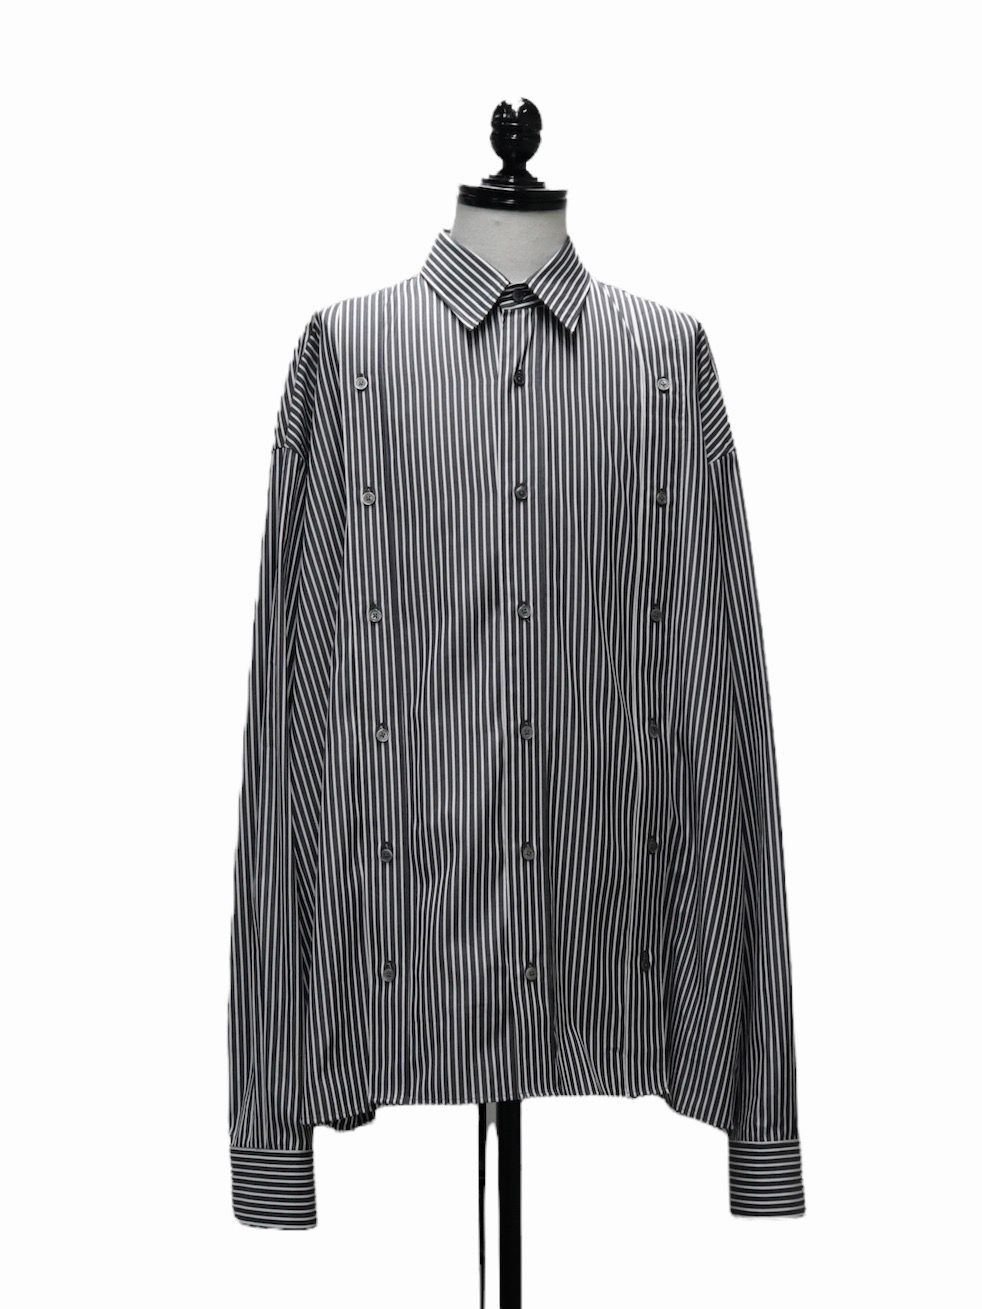 JOHNLAWRENCESULLIVAN - Stripe broadcloth oversized plackets shirt ...